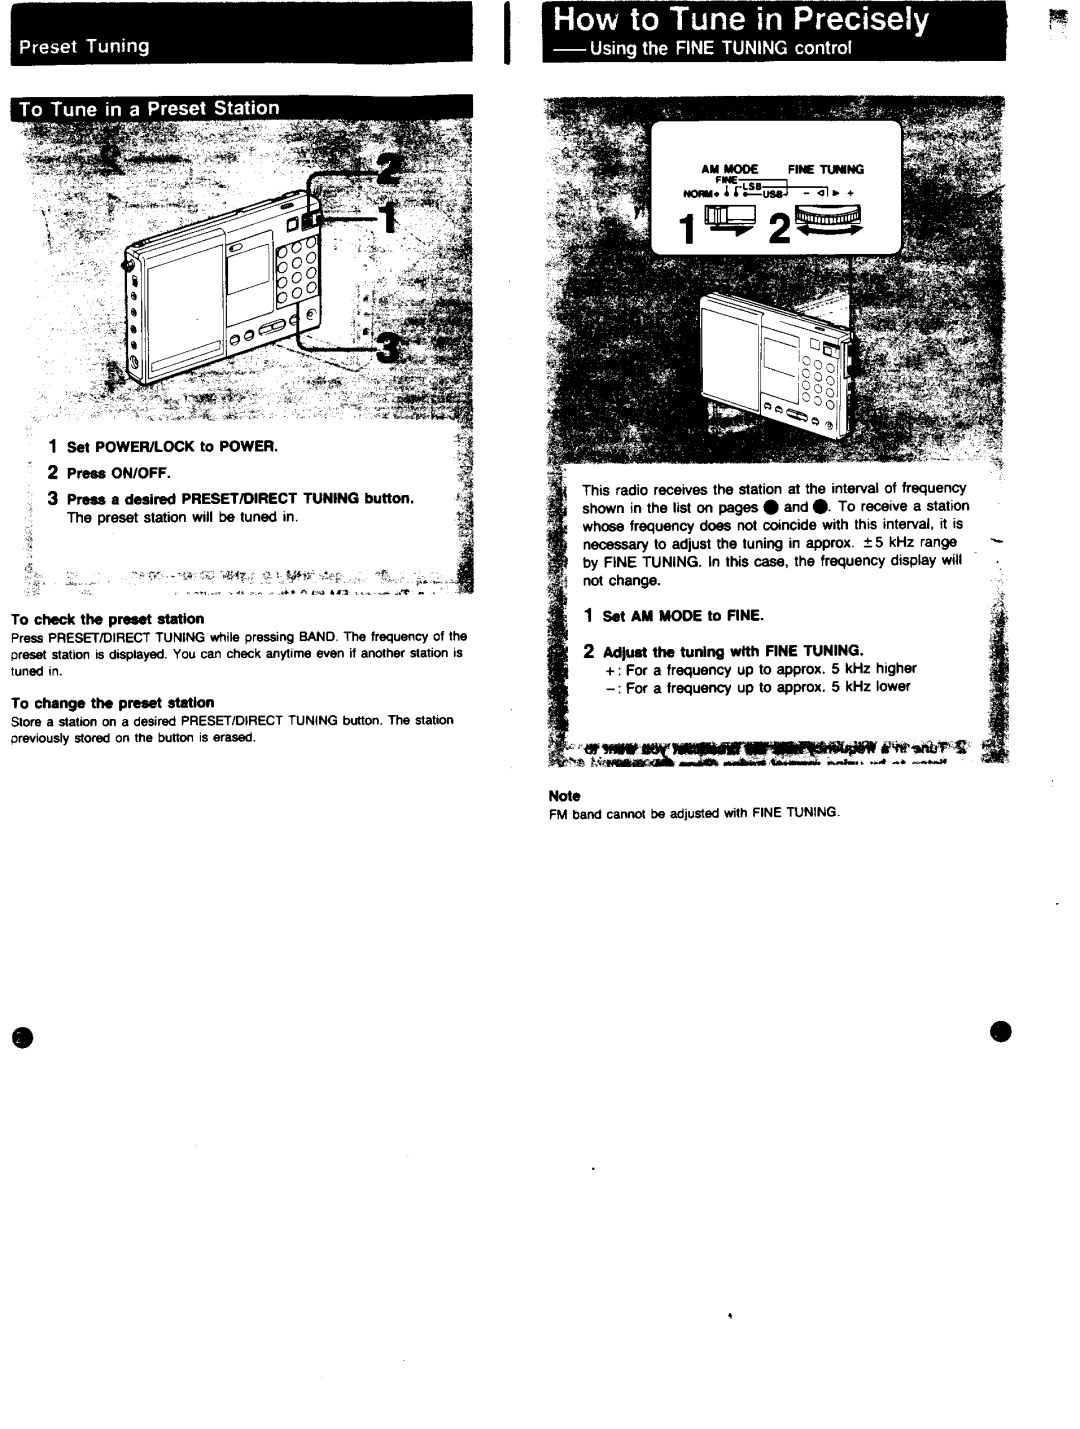 Sony ICF-SW7600 manual 